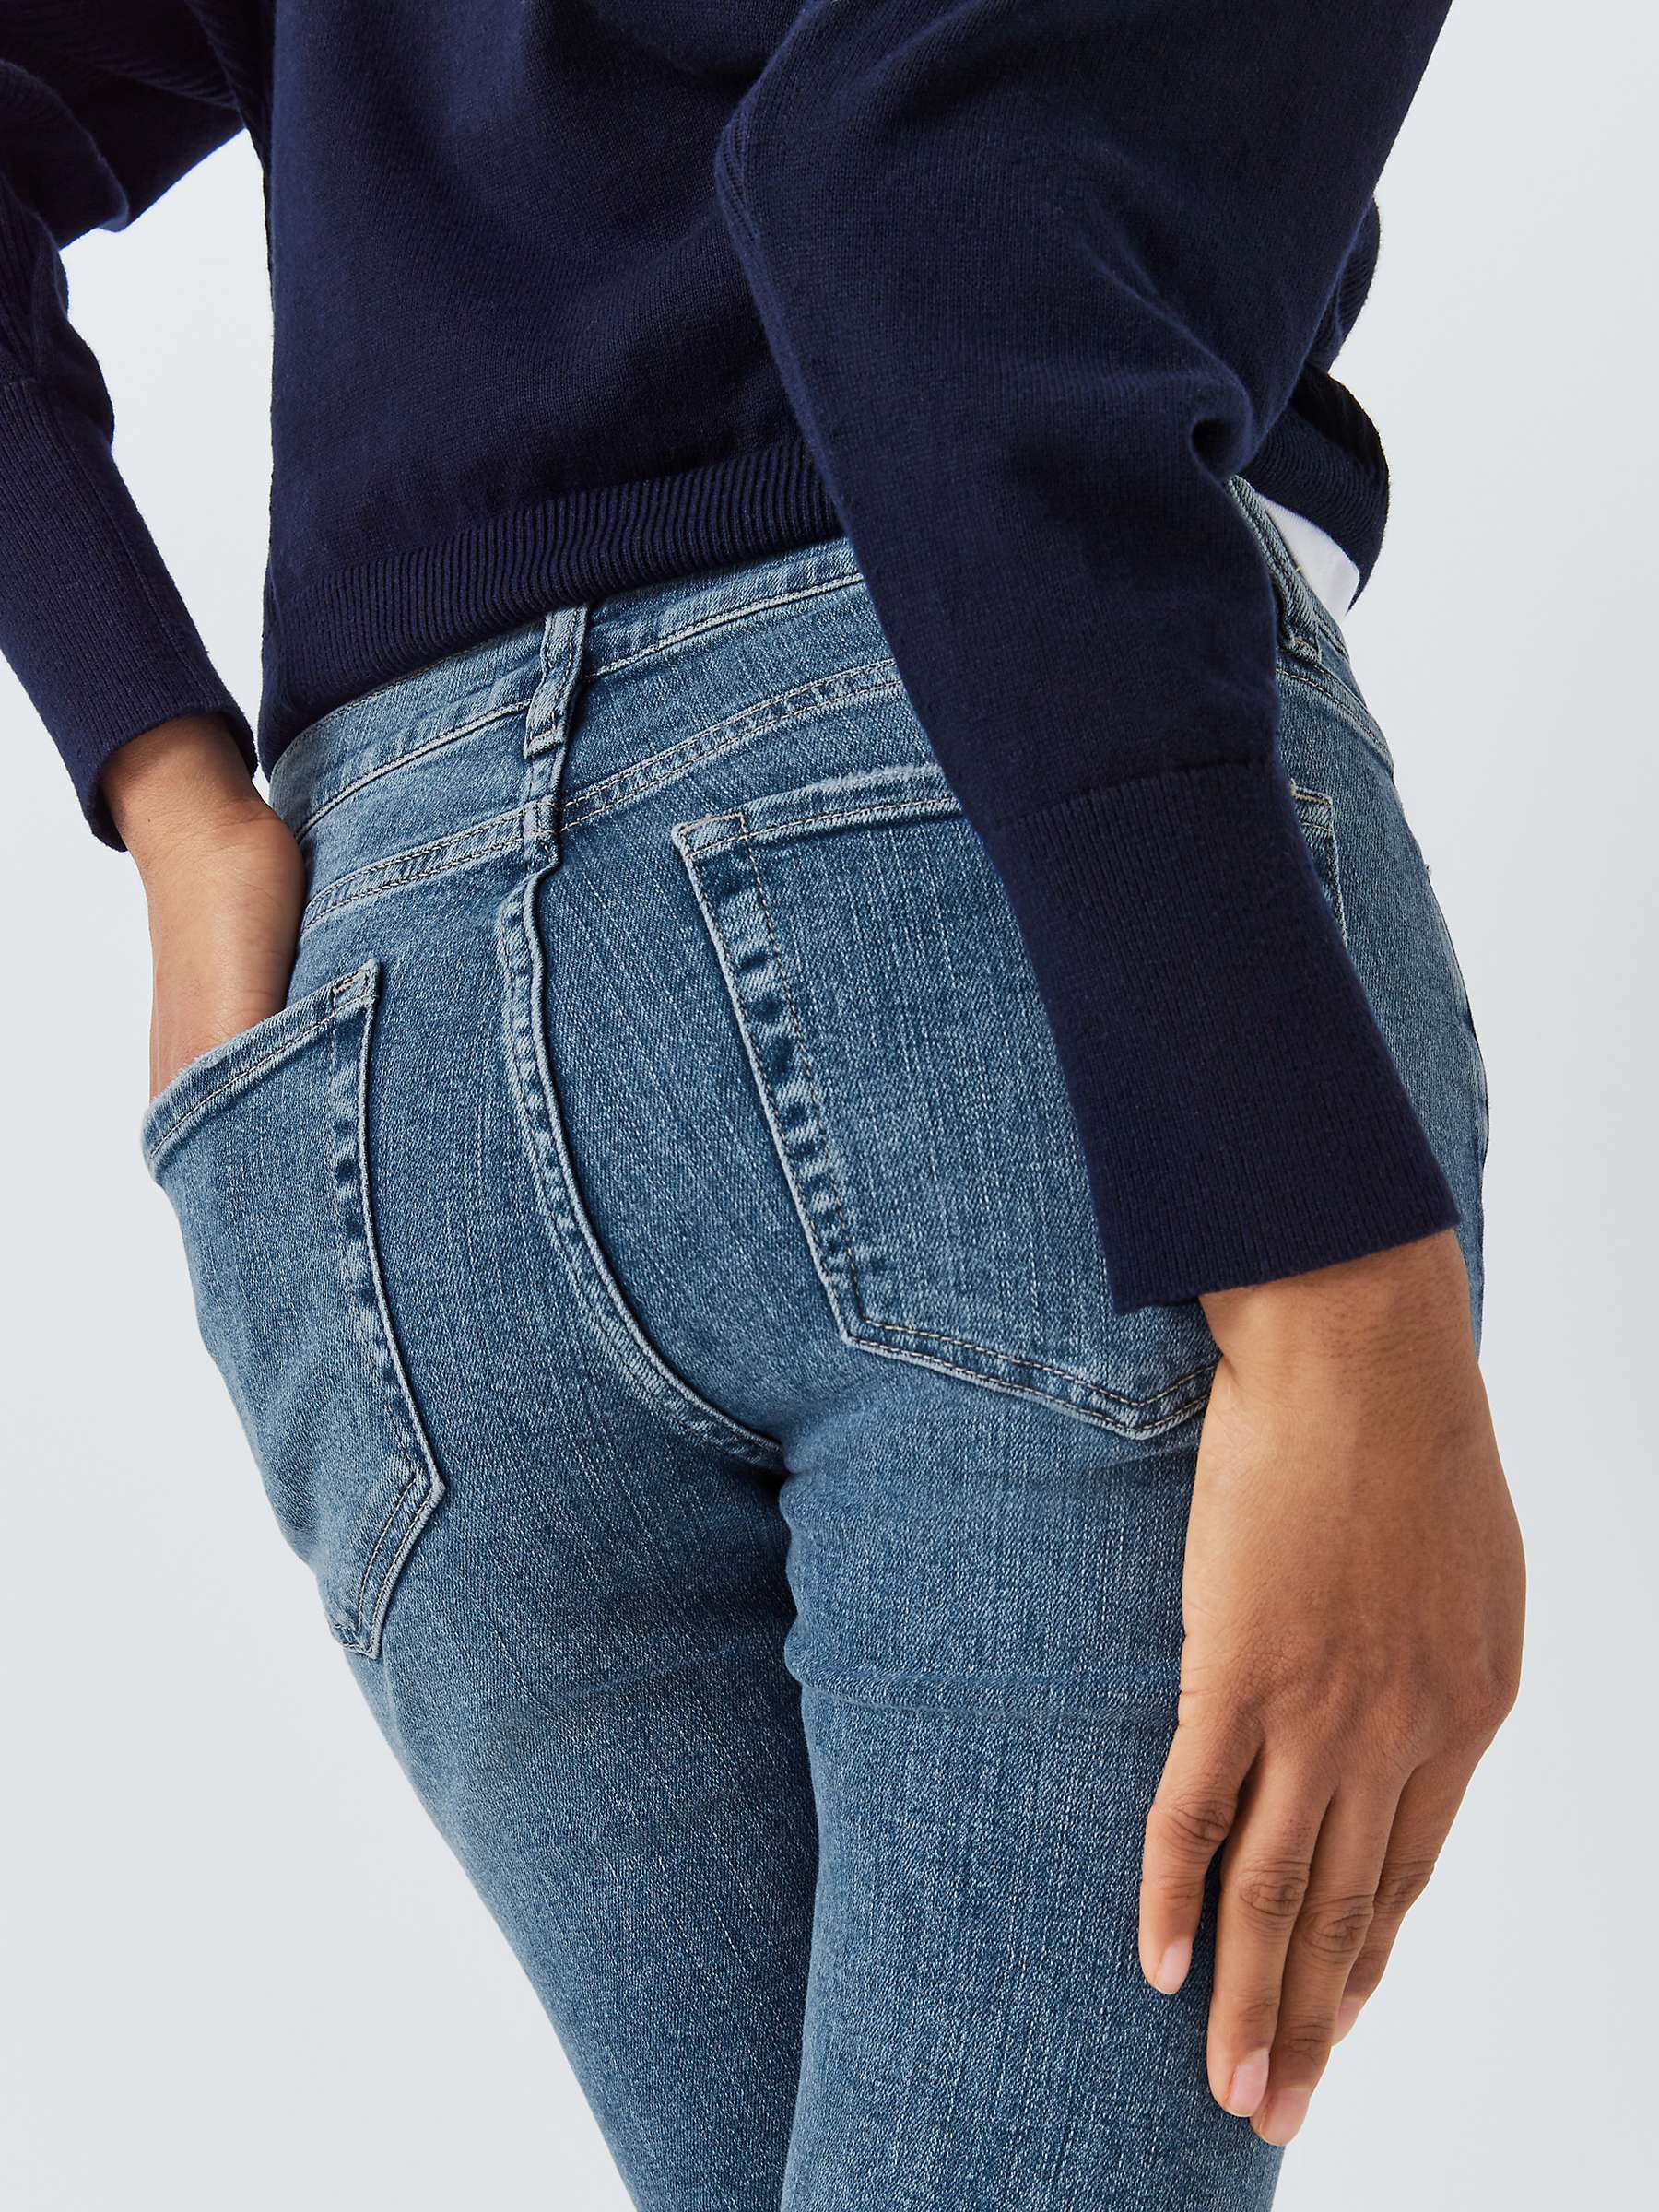 Buy FRAME Le Garcon Tapered Jeans, Mid Blue Online at johnlewis.com